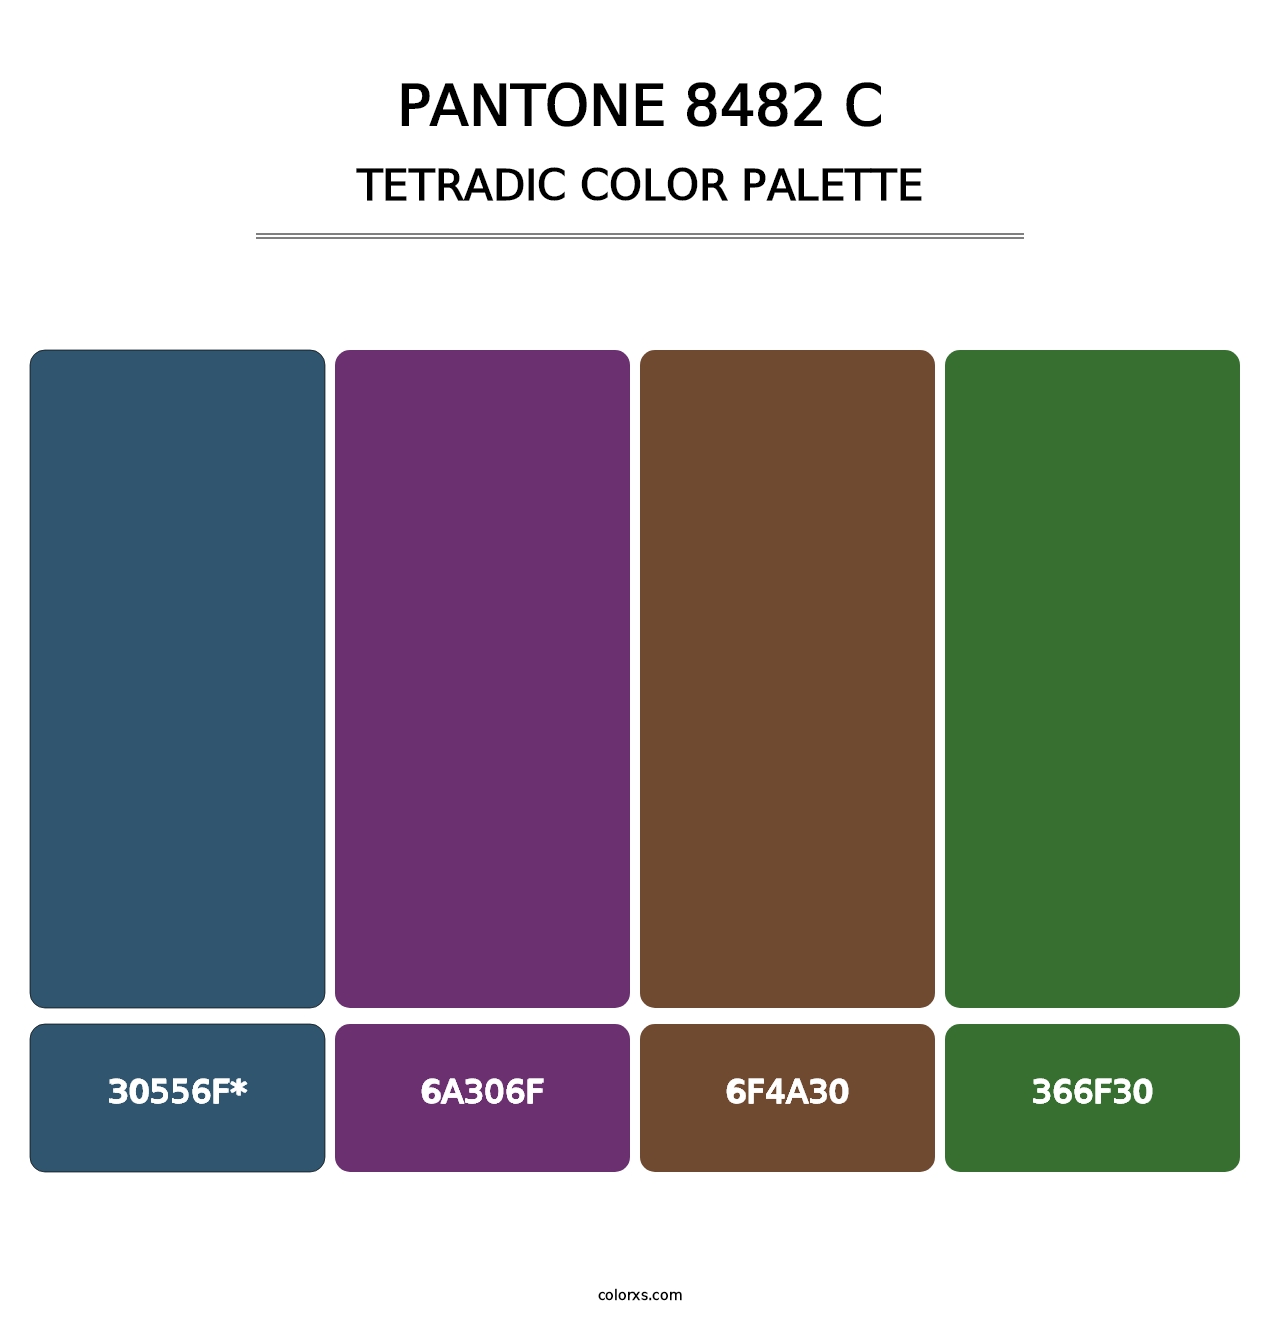 PANTONE 8482 C - Tetradic Color Palette